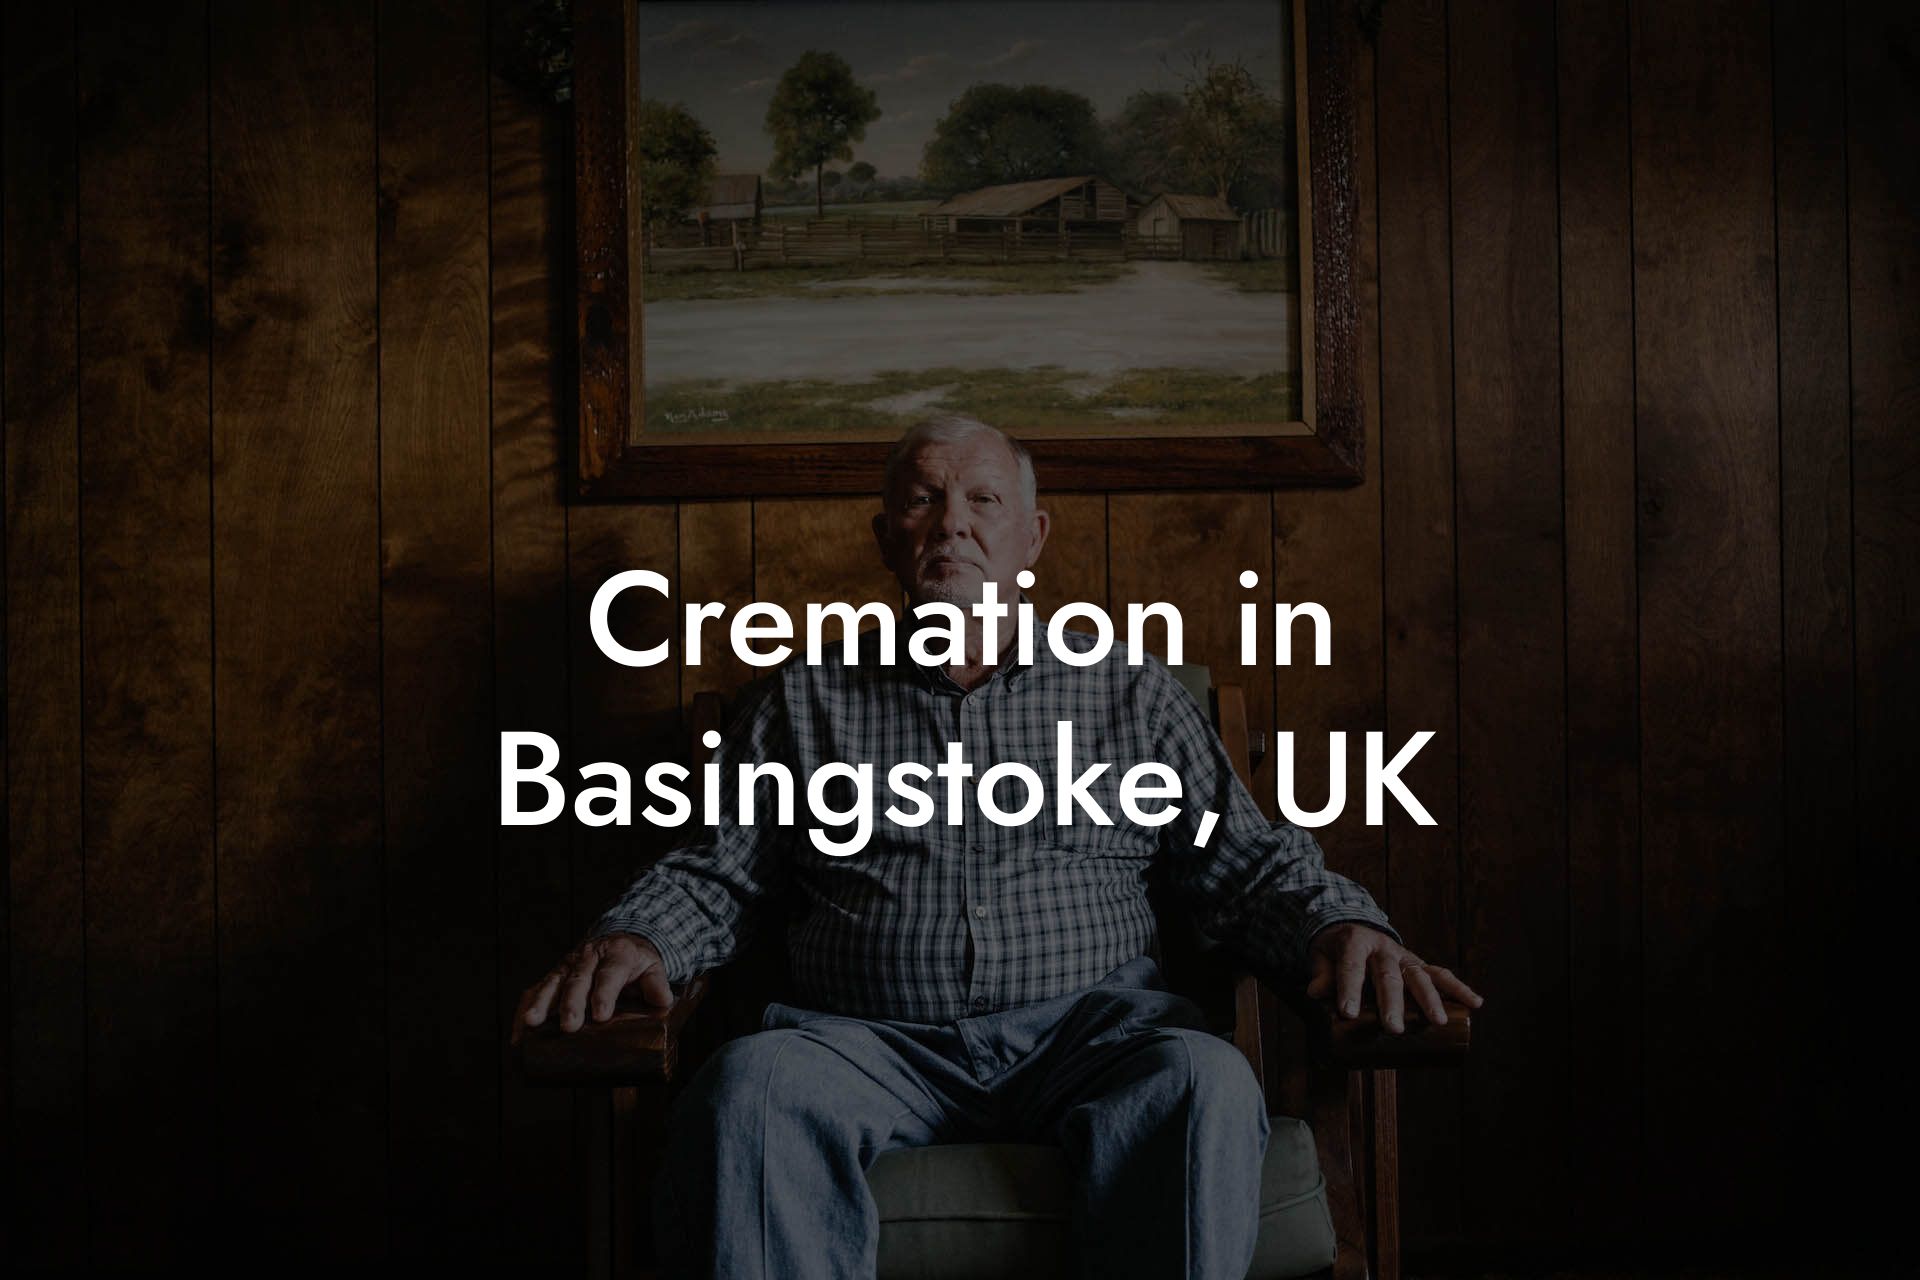 Cremation in Basingstoke, UK